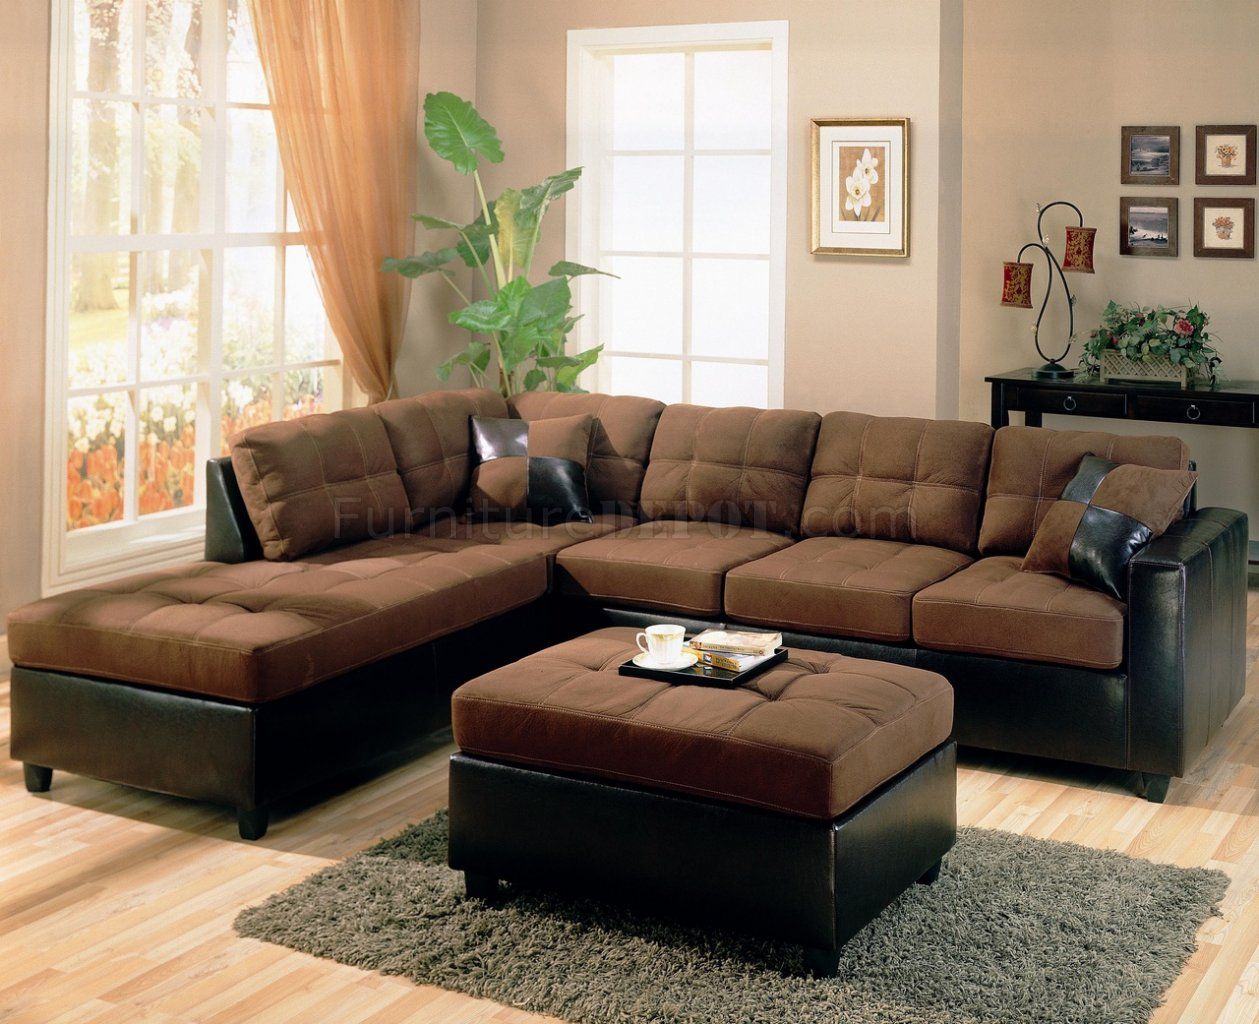 Two Tone Modern Sectional Sofa 500655 Chocolate/dark Brown In 2 Tone Chocolate Microfiber Sofas (View 6 of 15)